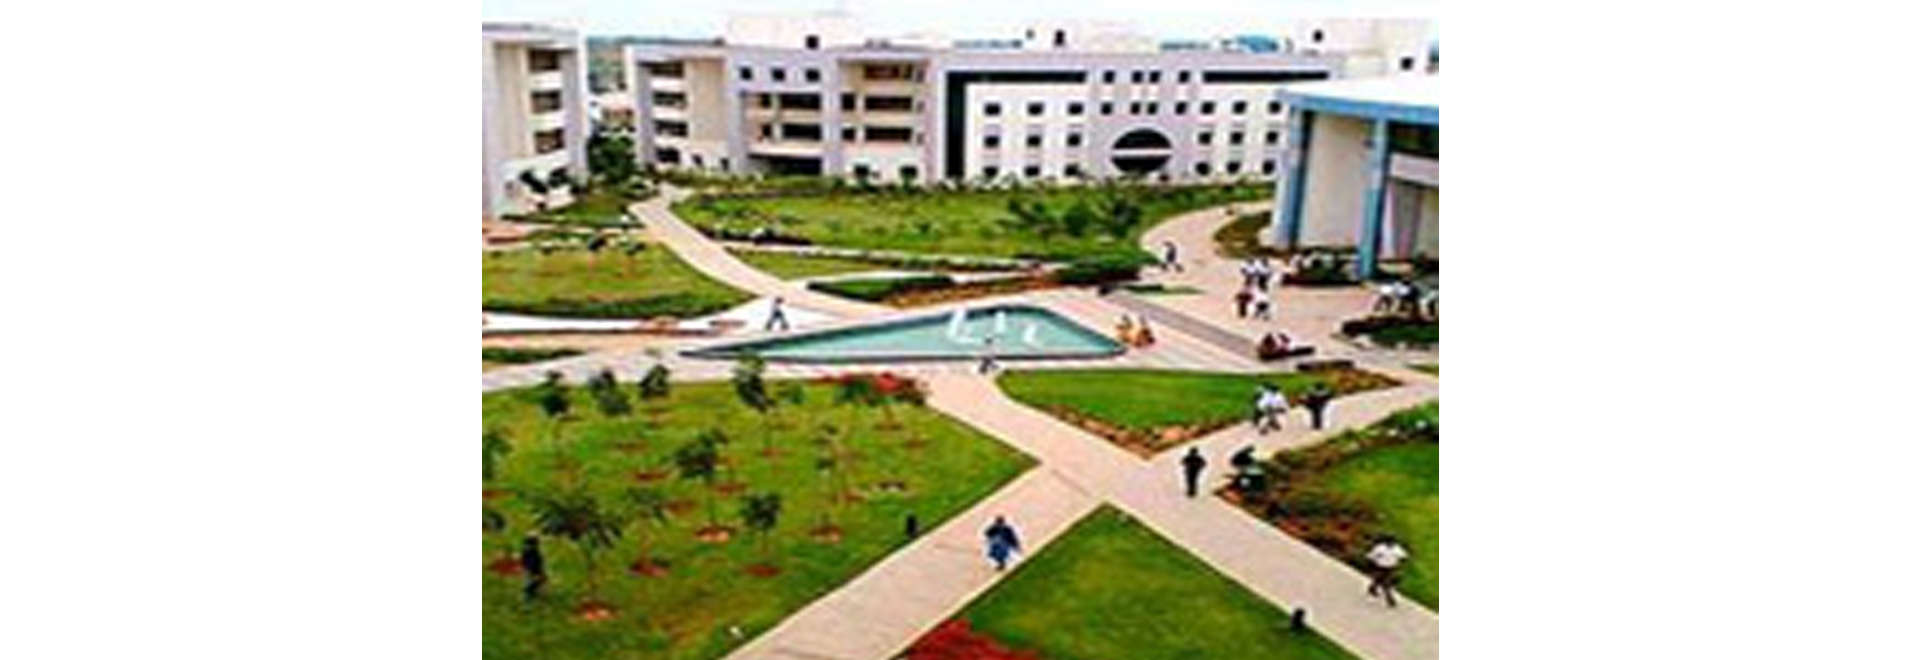 Software Development Centre at Electronic City, Bangalore, India